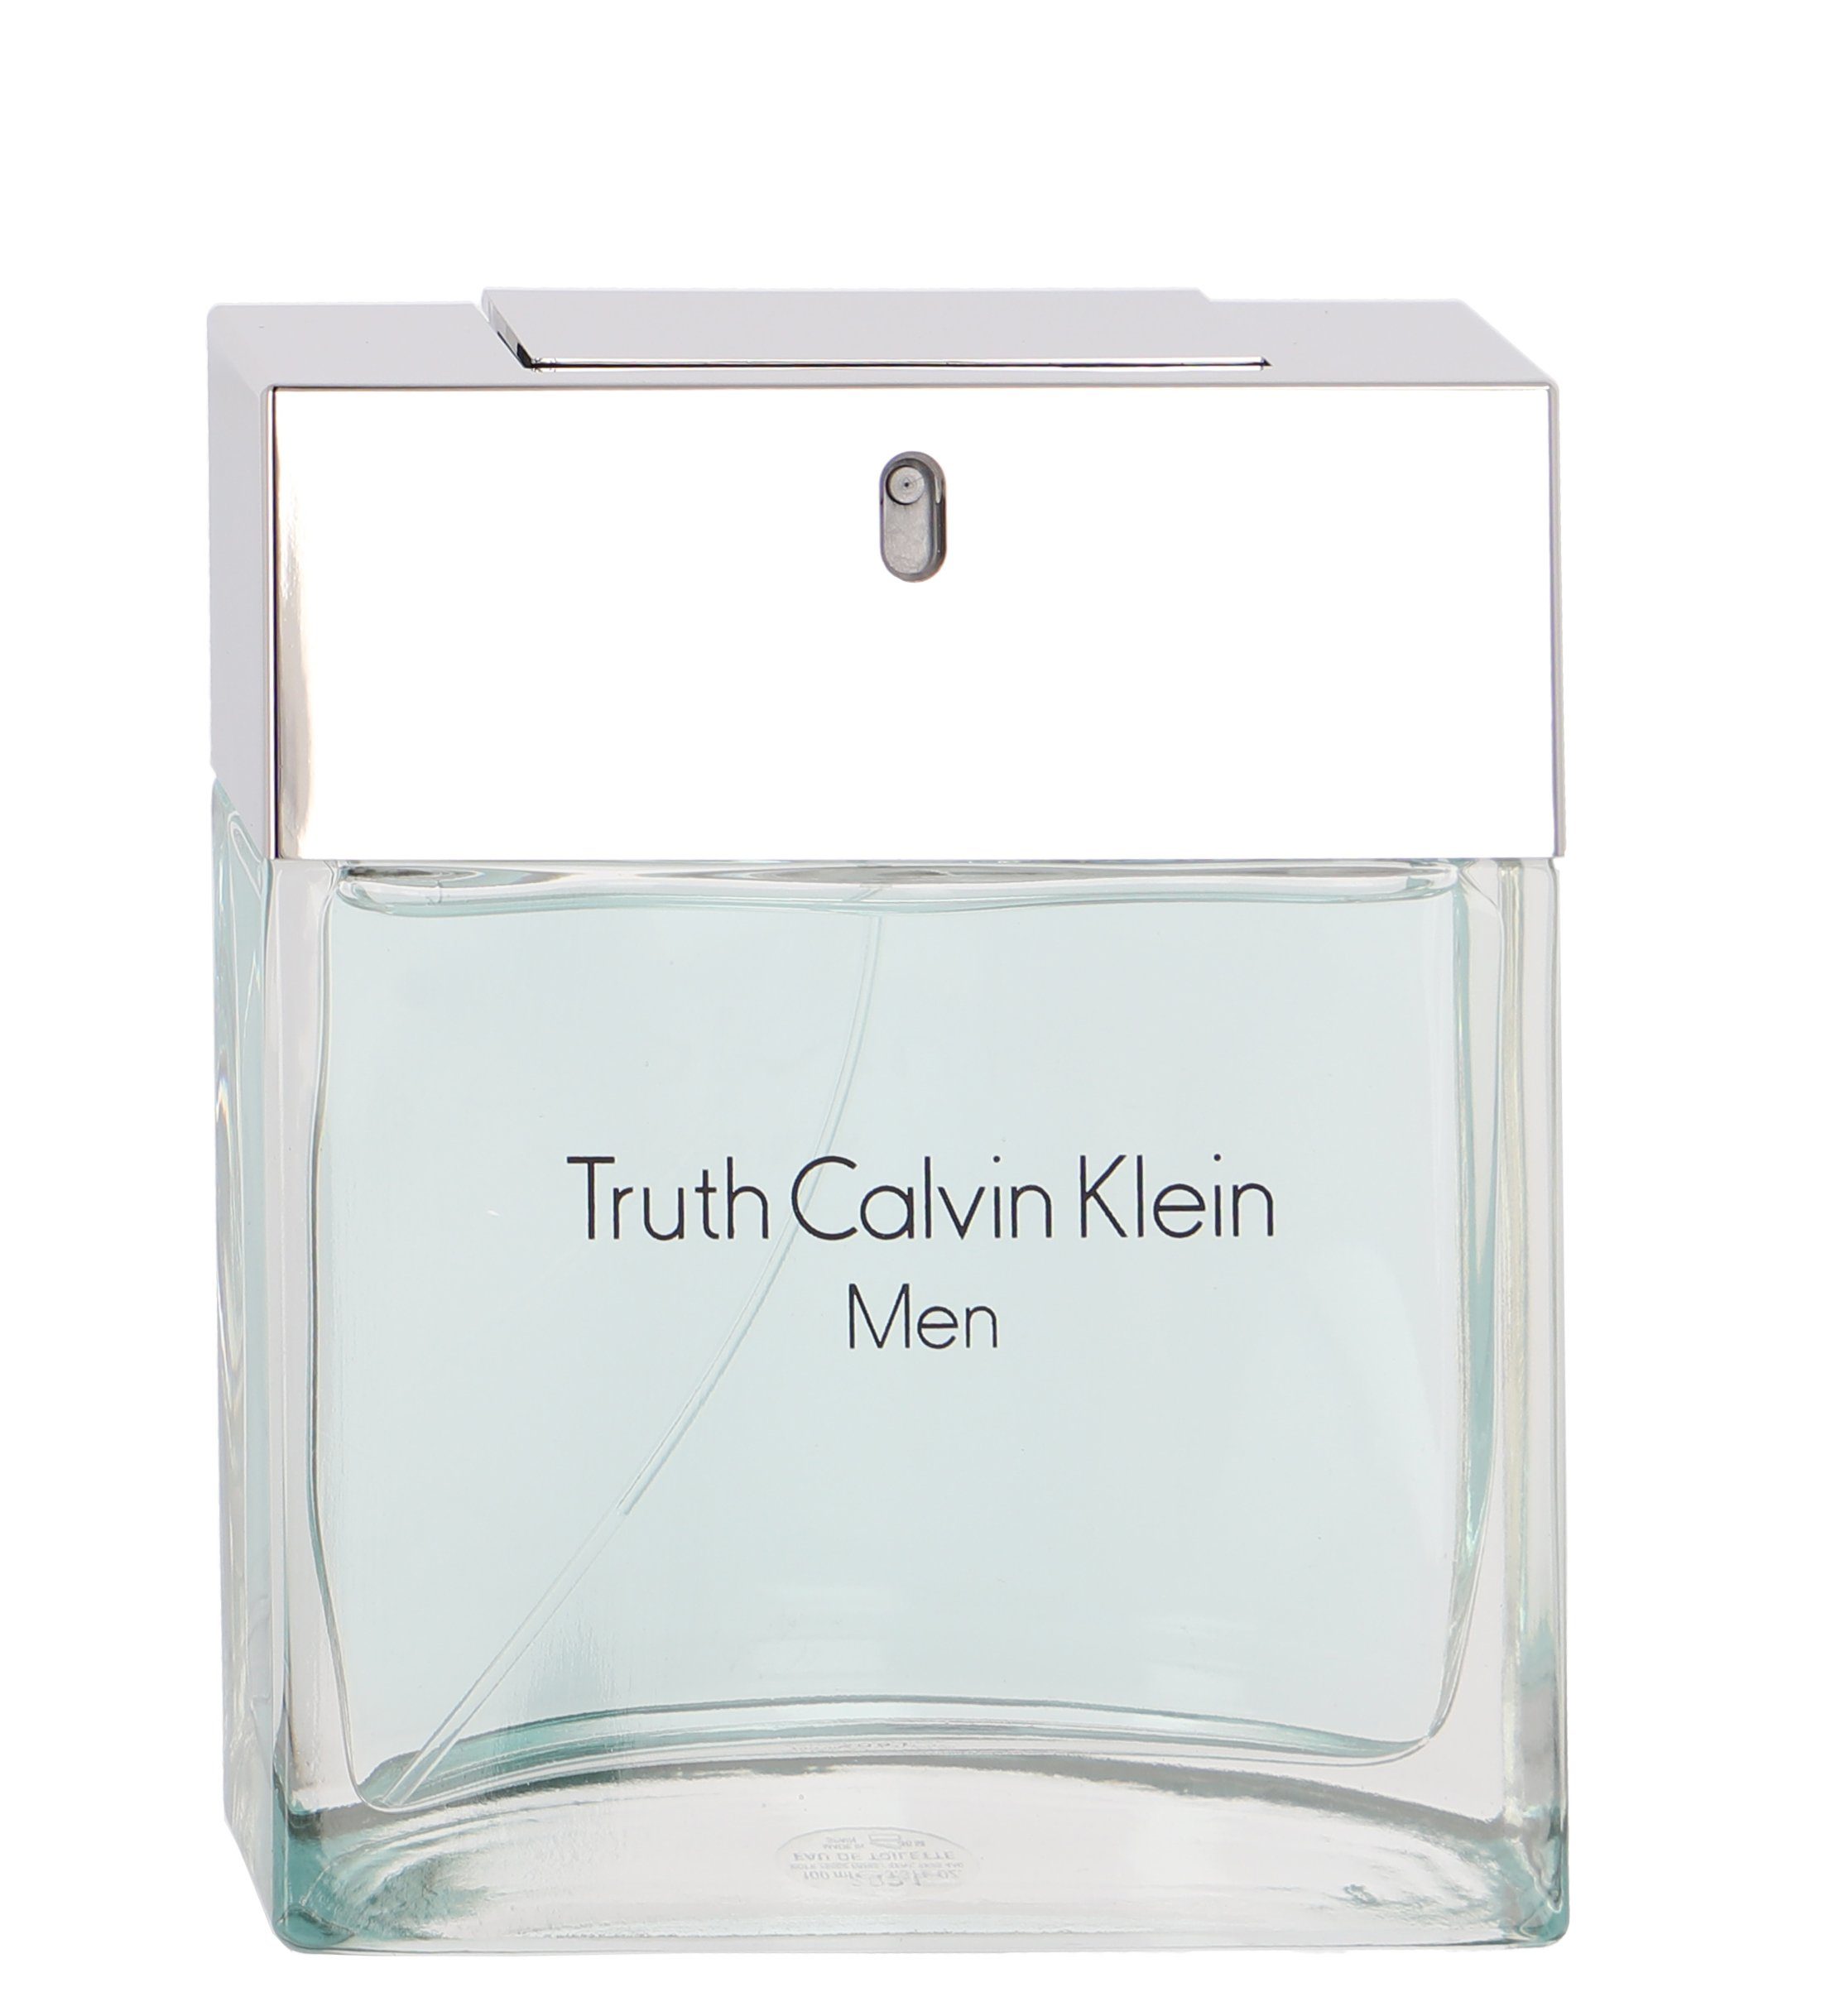 Calvin Klein Eau Truth Toilette de Men